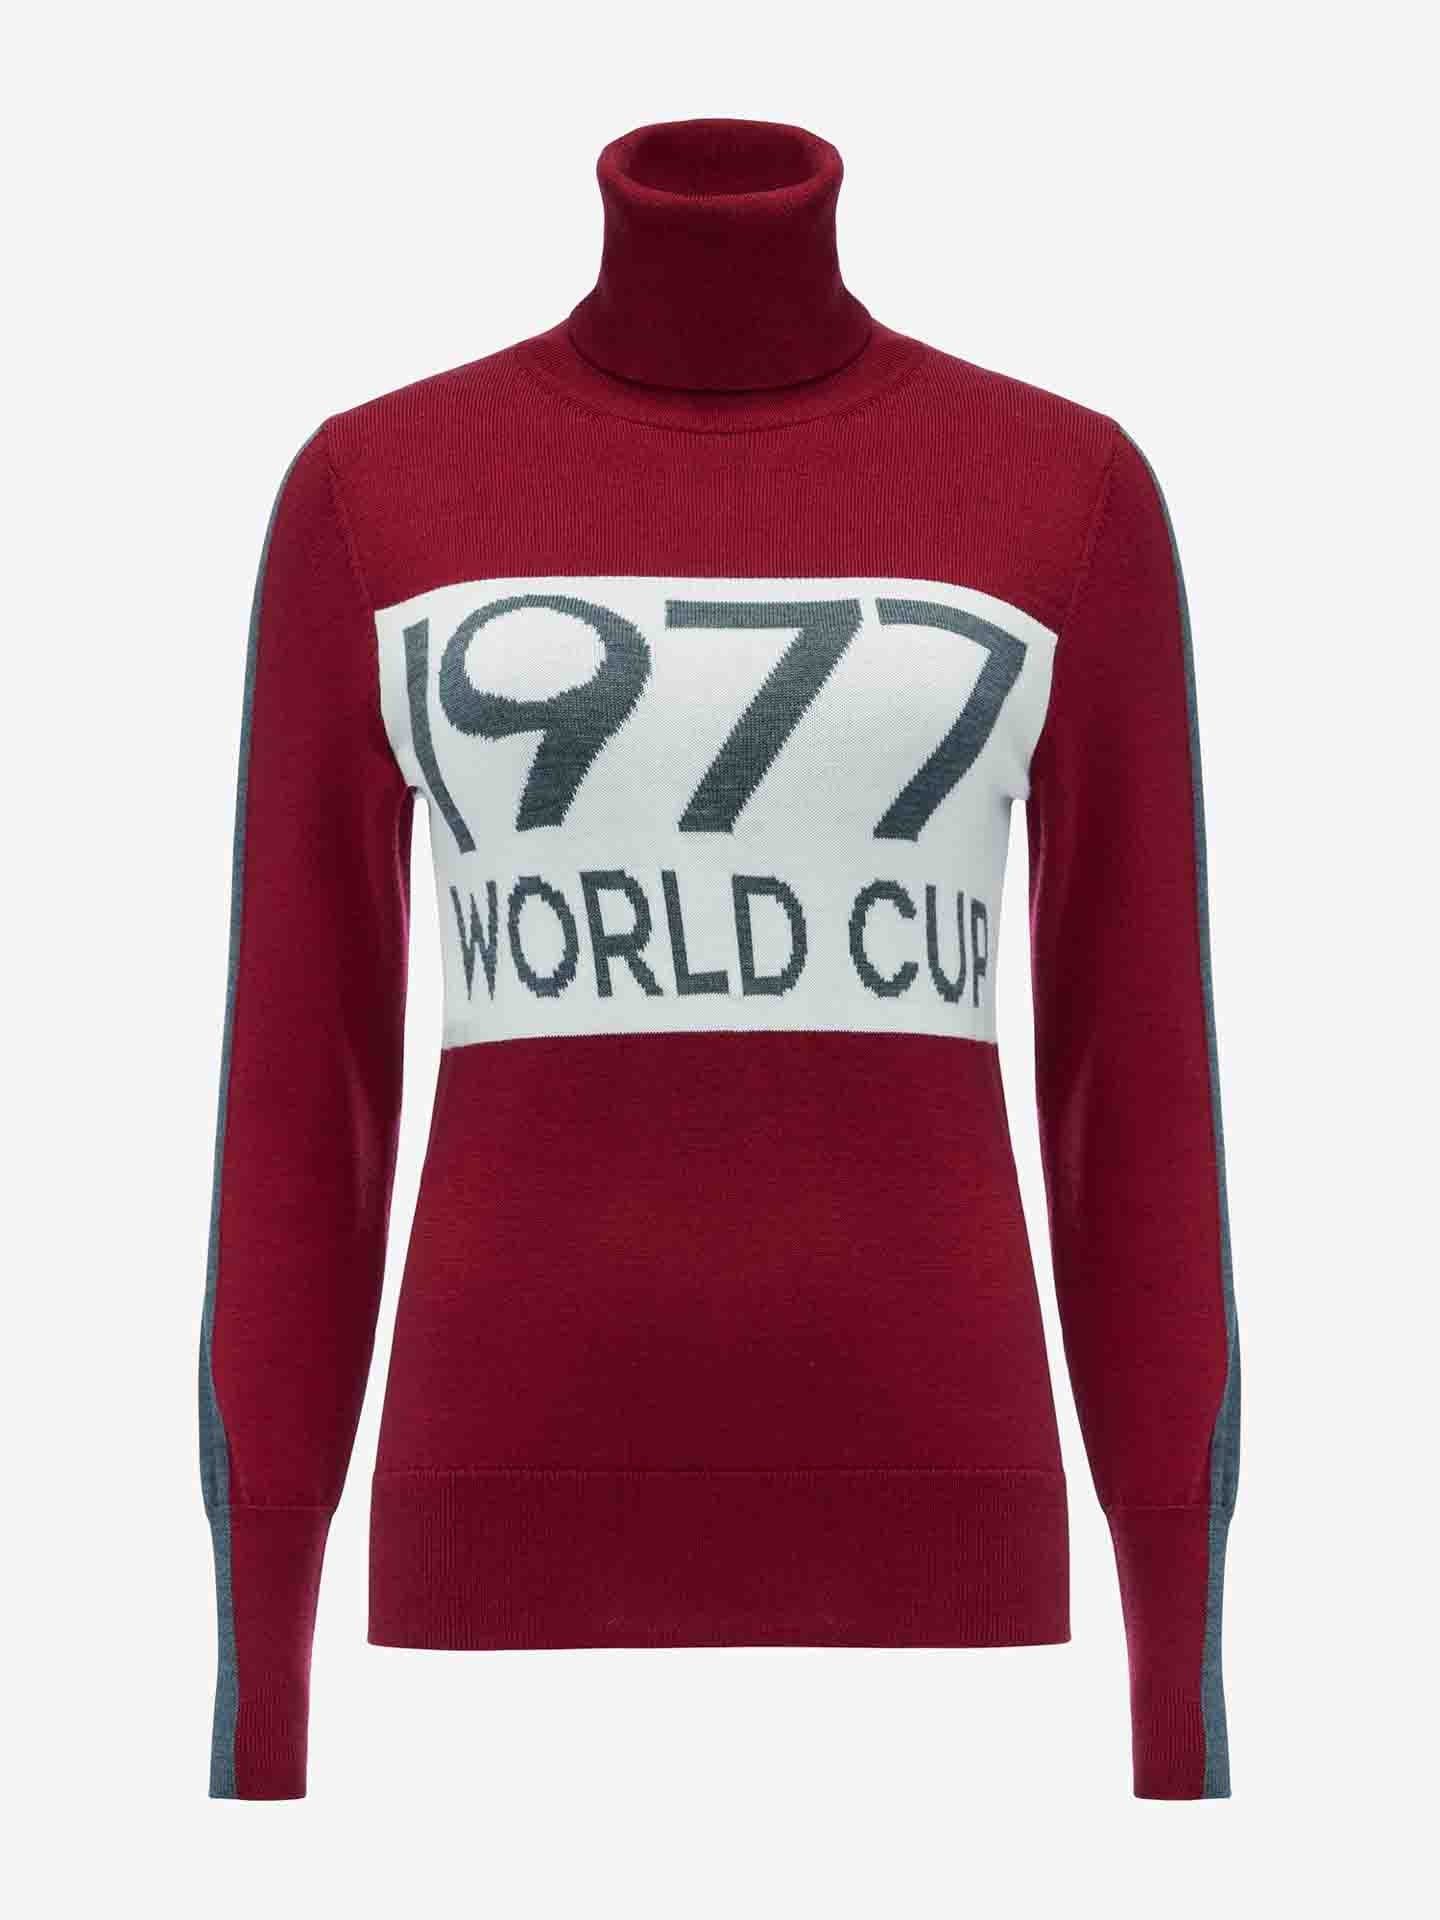 1977 World Cup Sweater Women Burgundy